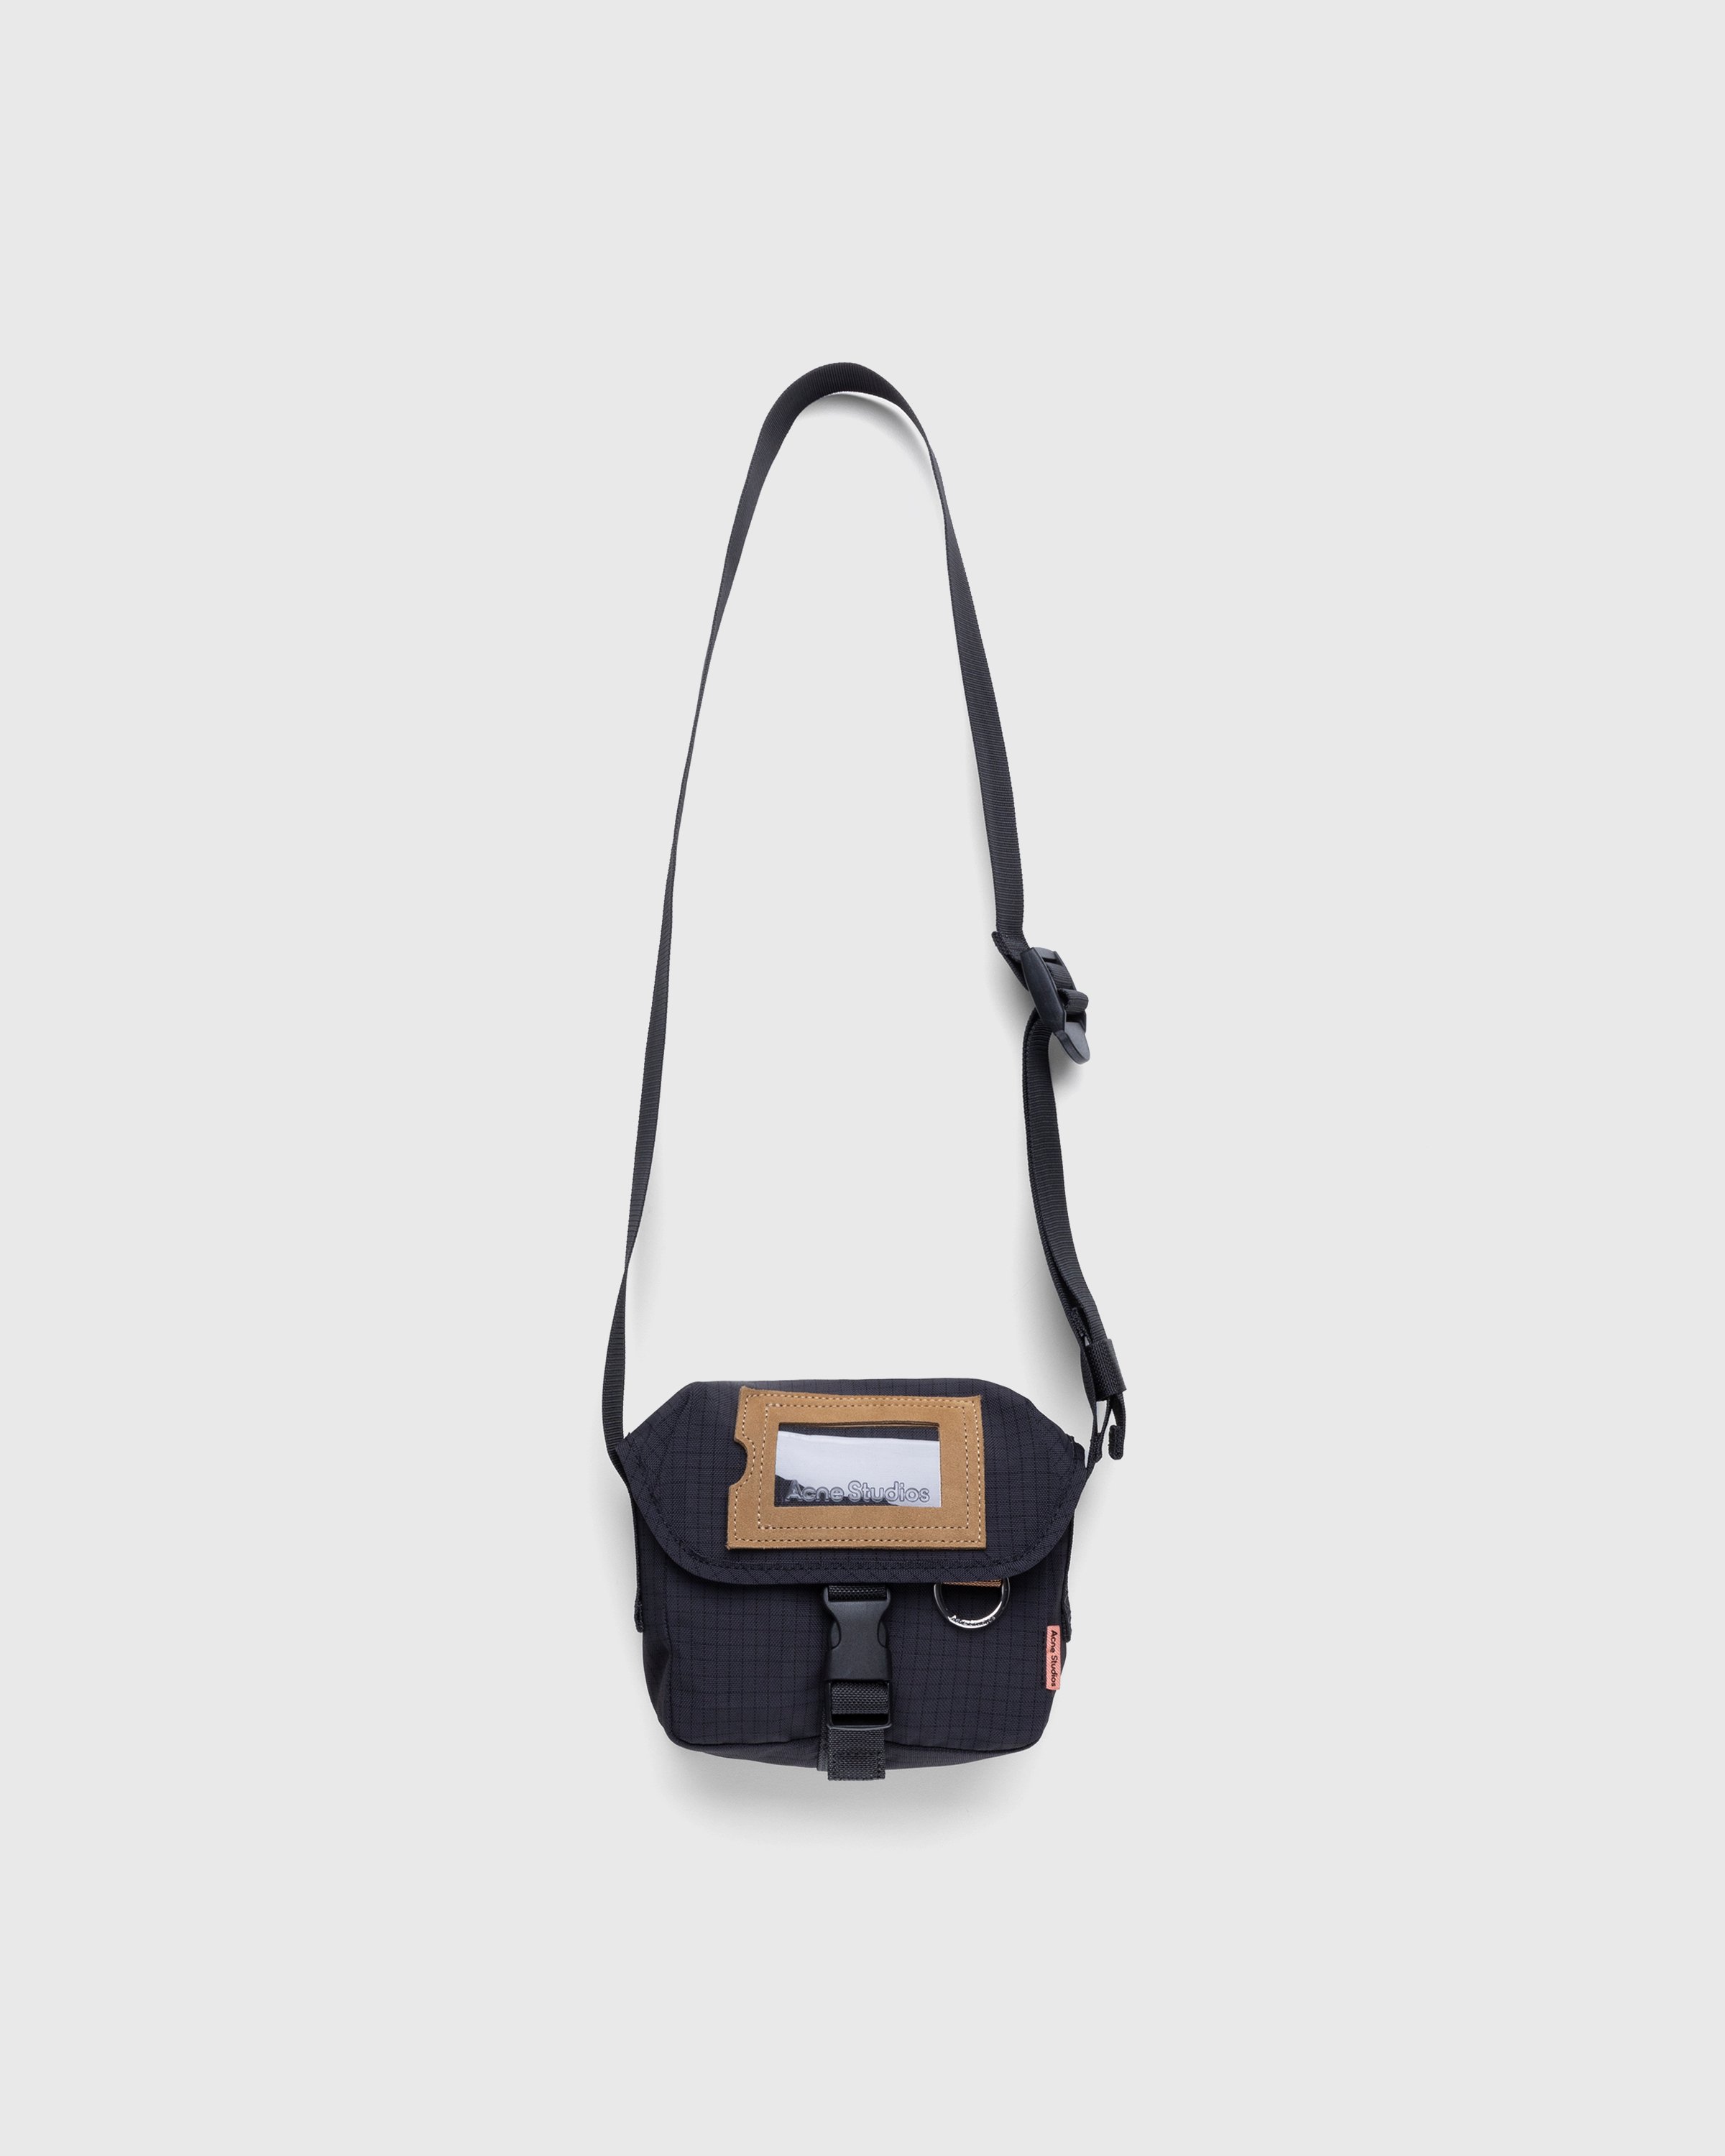 Acne Studios - Mini Messenger Bag Black - Accessories - Black - Image 1